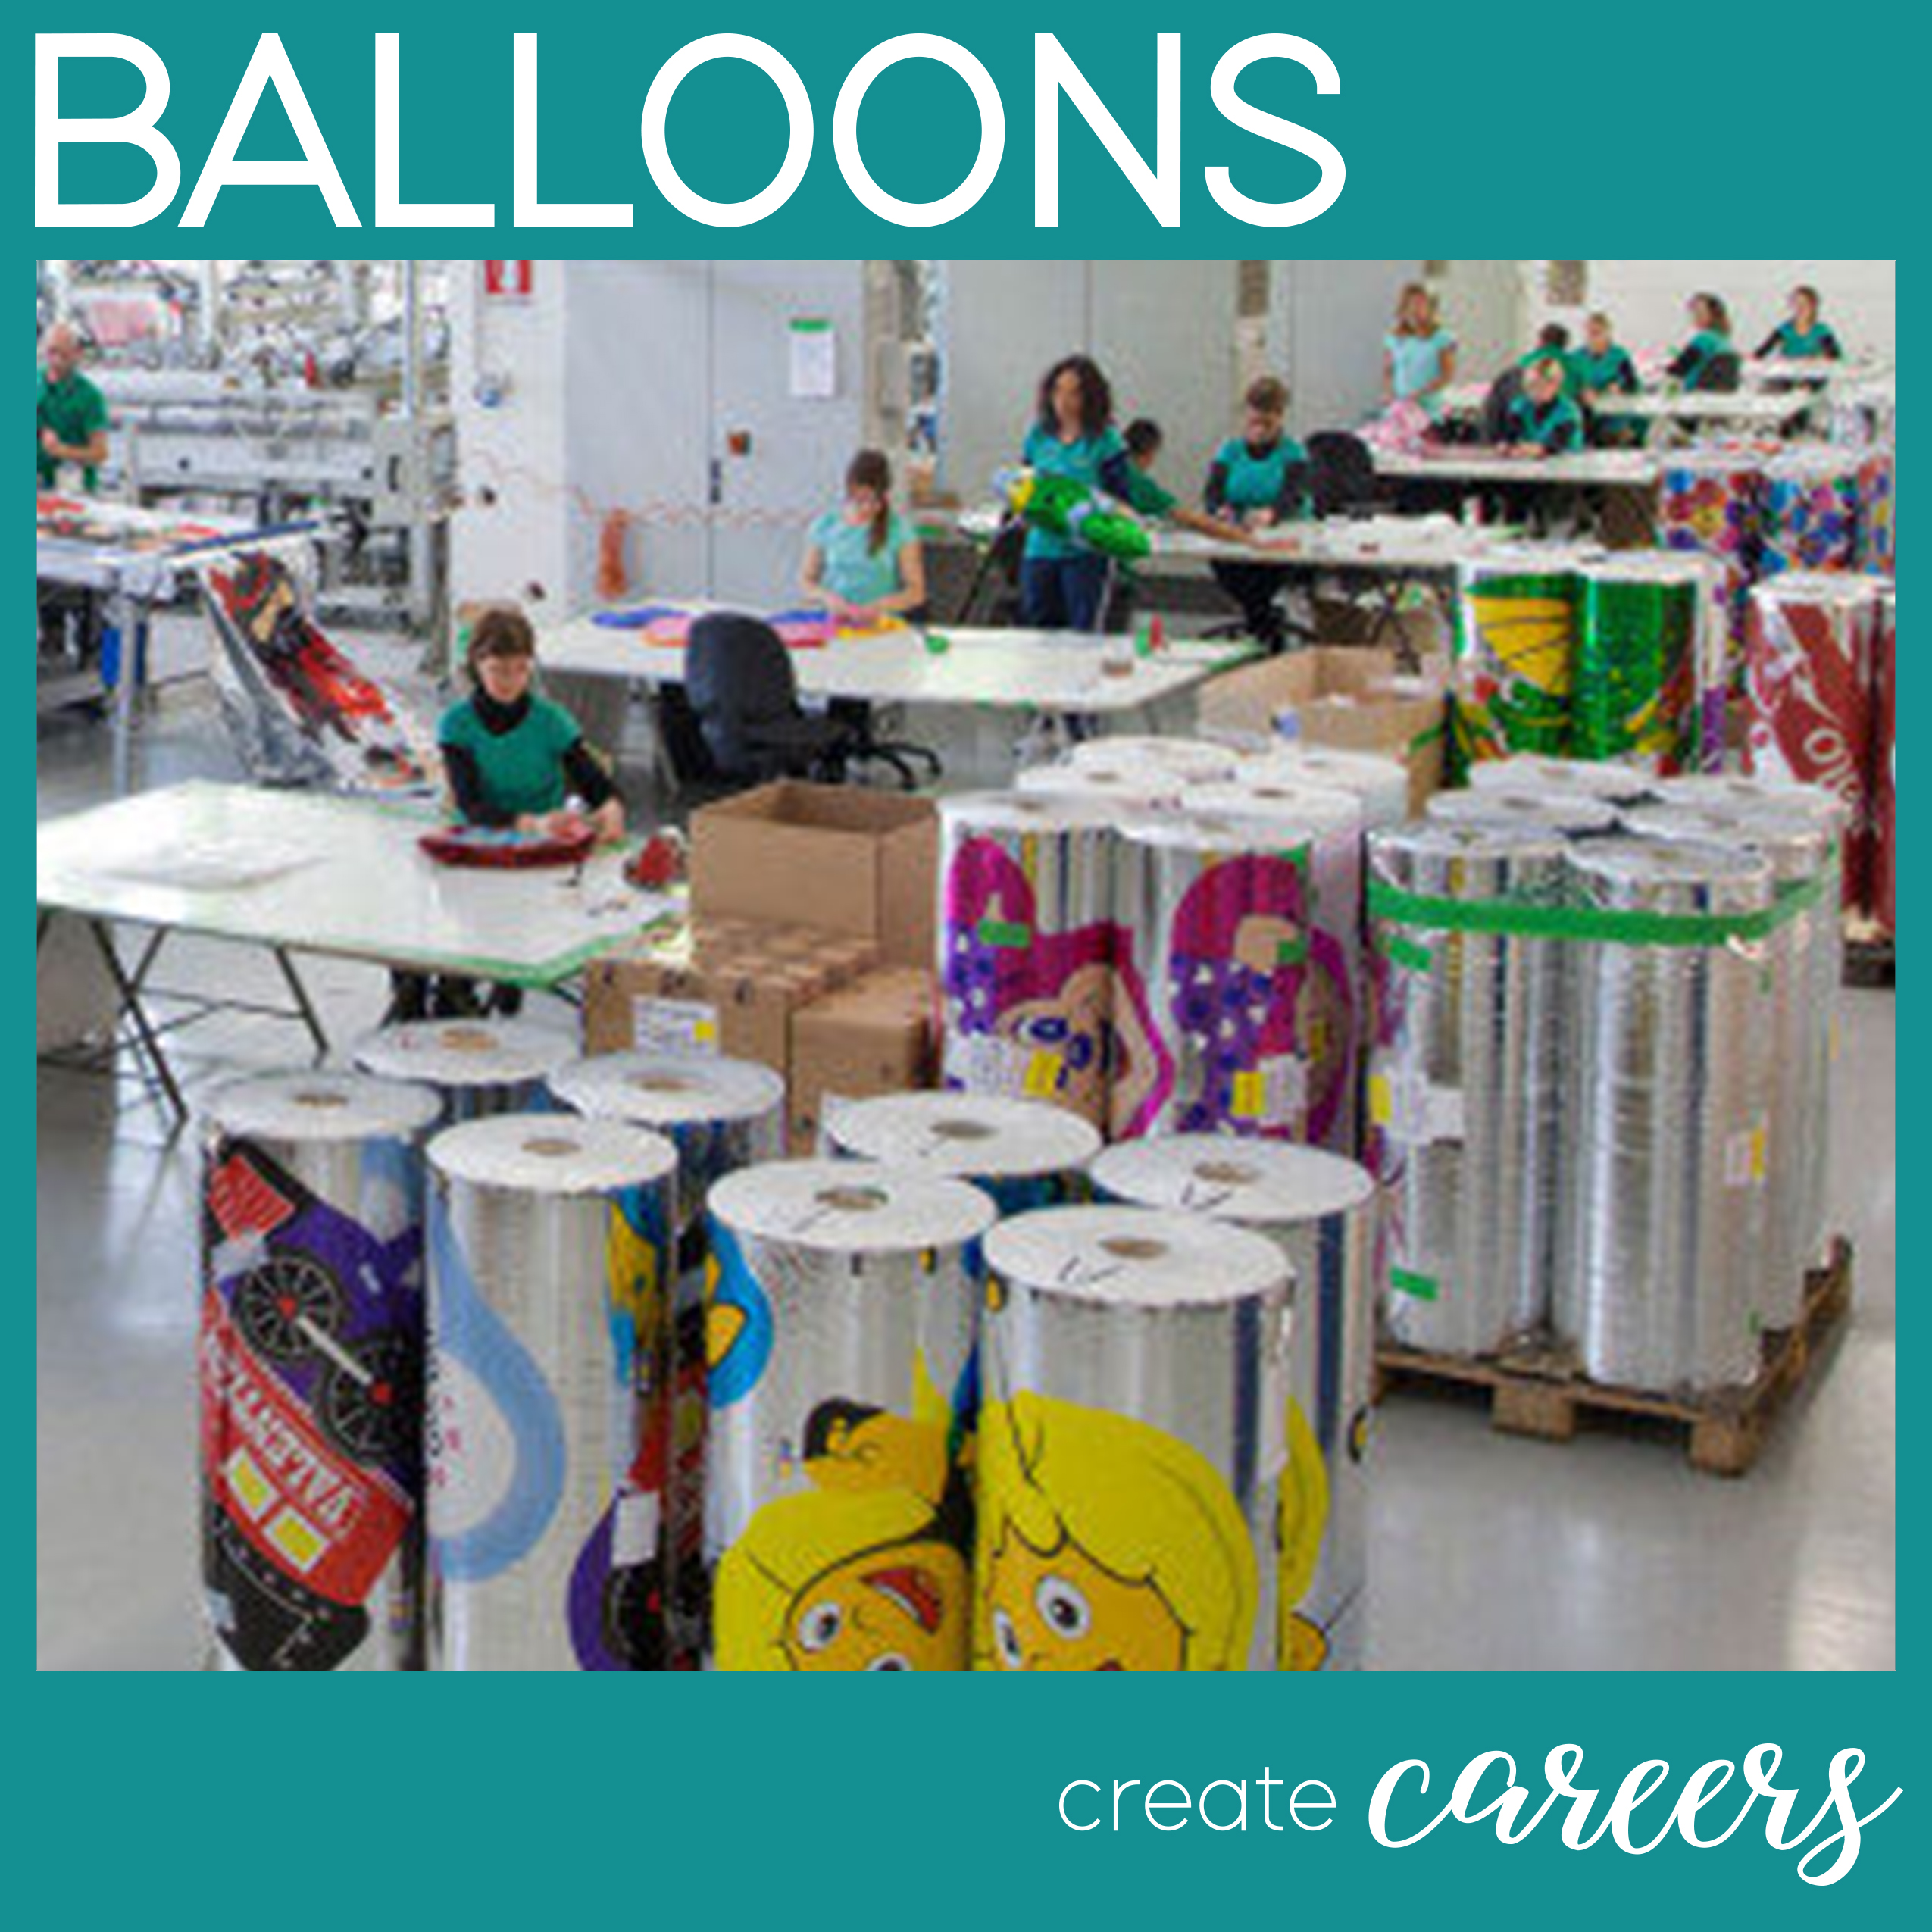 Balloon Facts - Balloons create careers